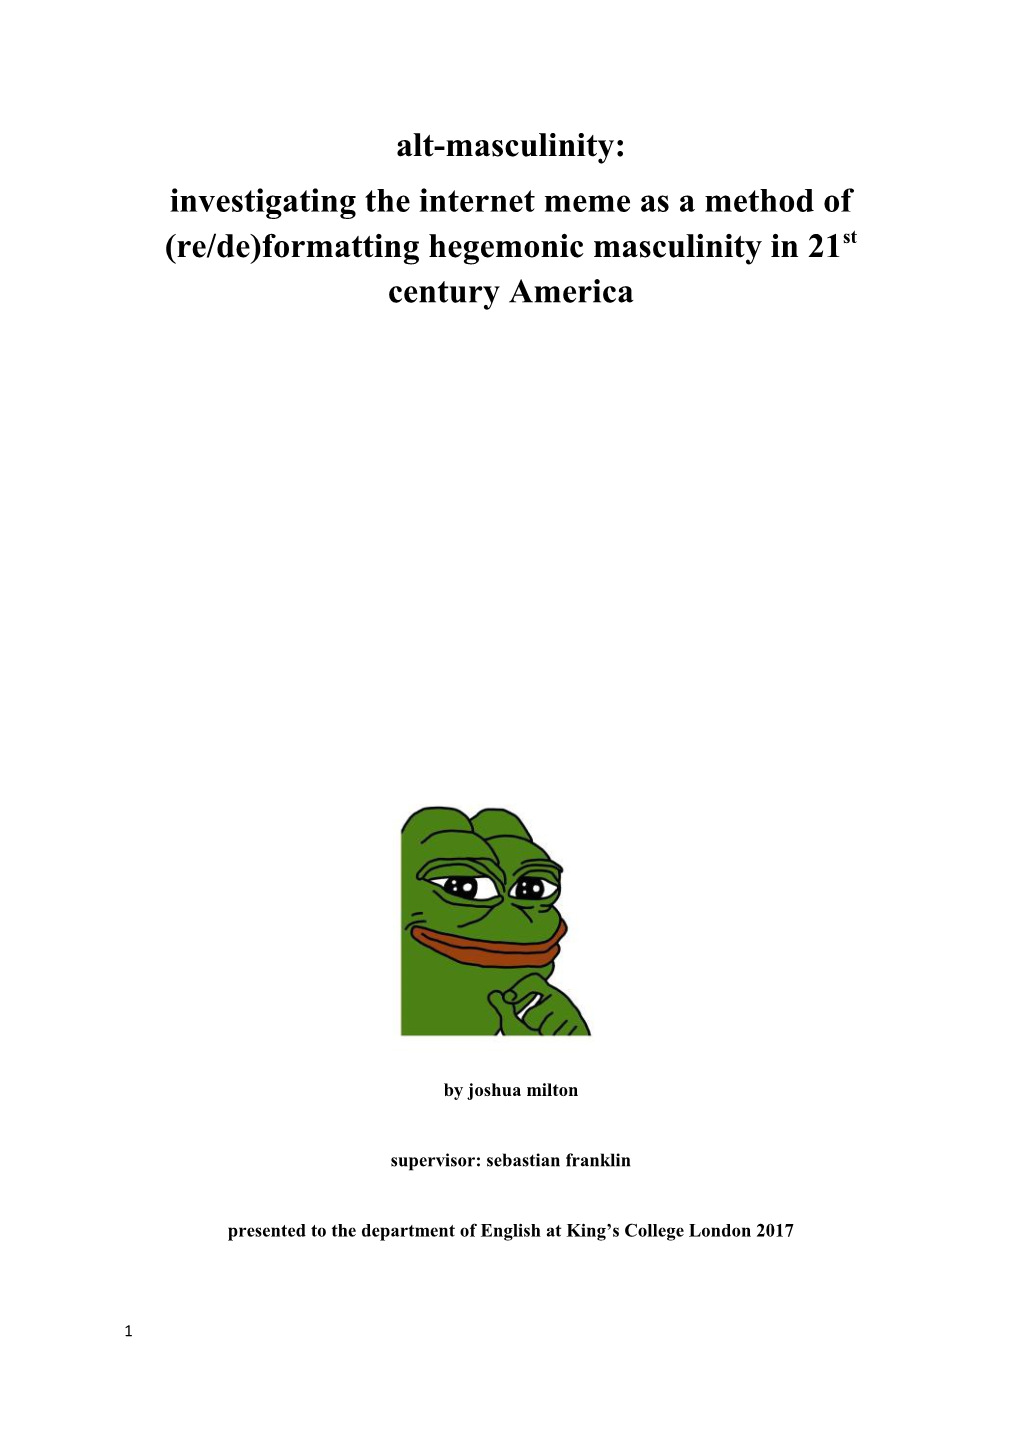 Investigating the Internet Meme As a Method of (Re/De)Formattinghegemonic Masculinity